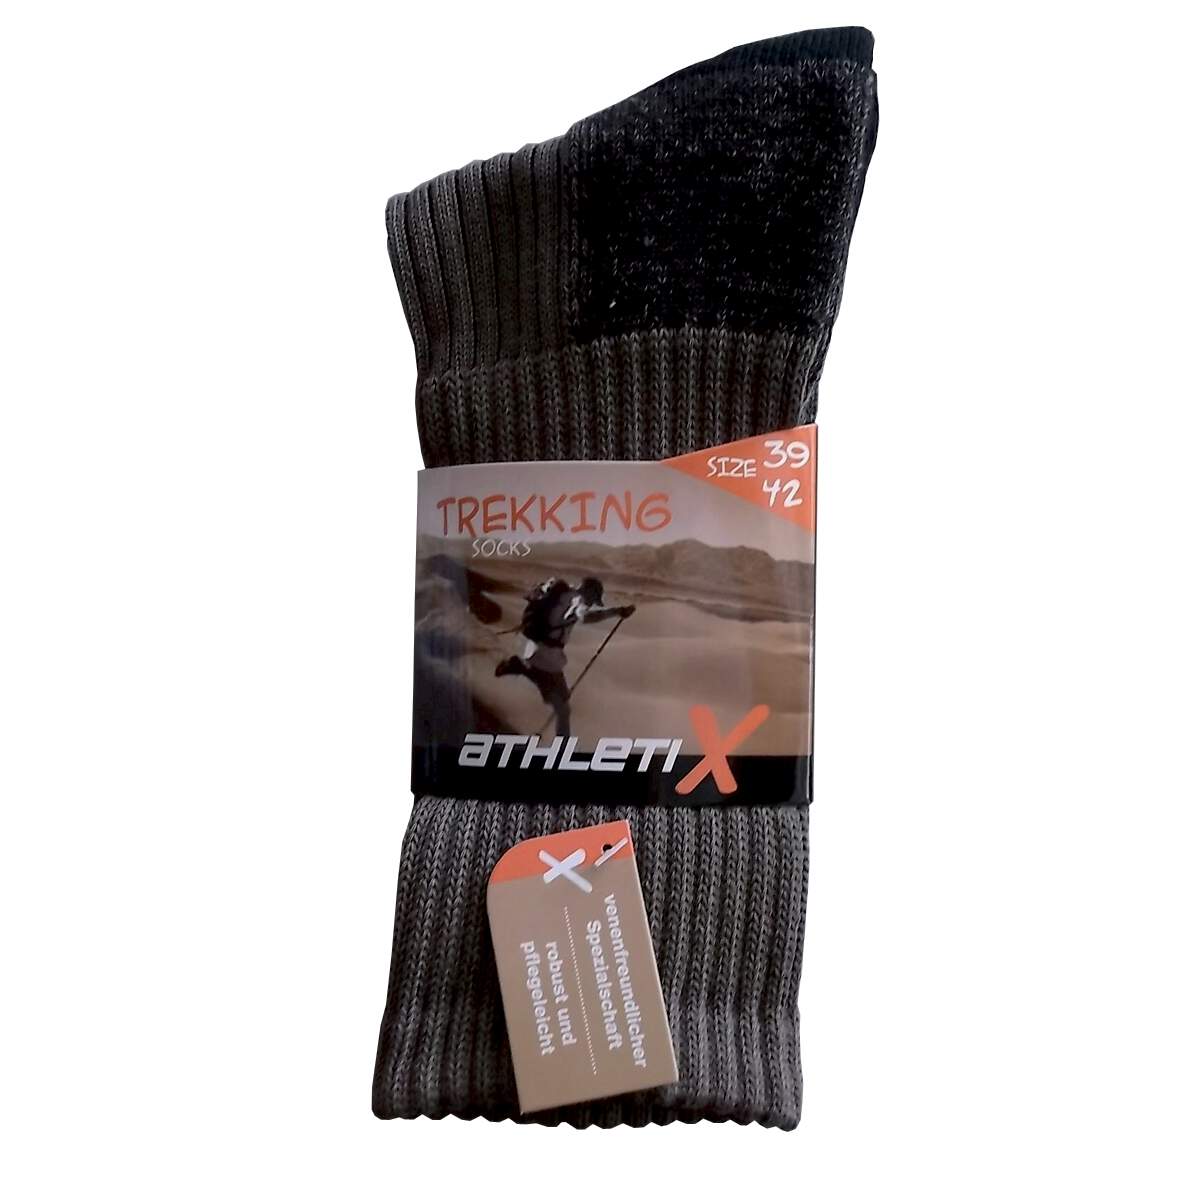 1214705 - Socken Athletix Trekking 099 2er